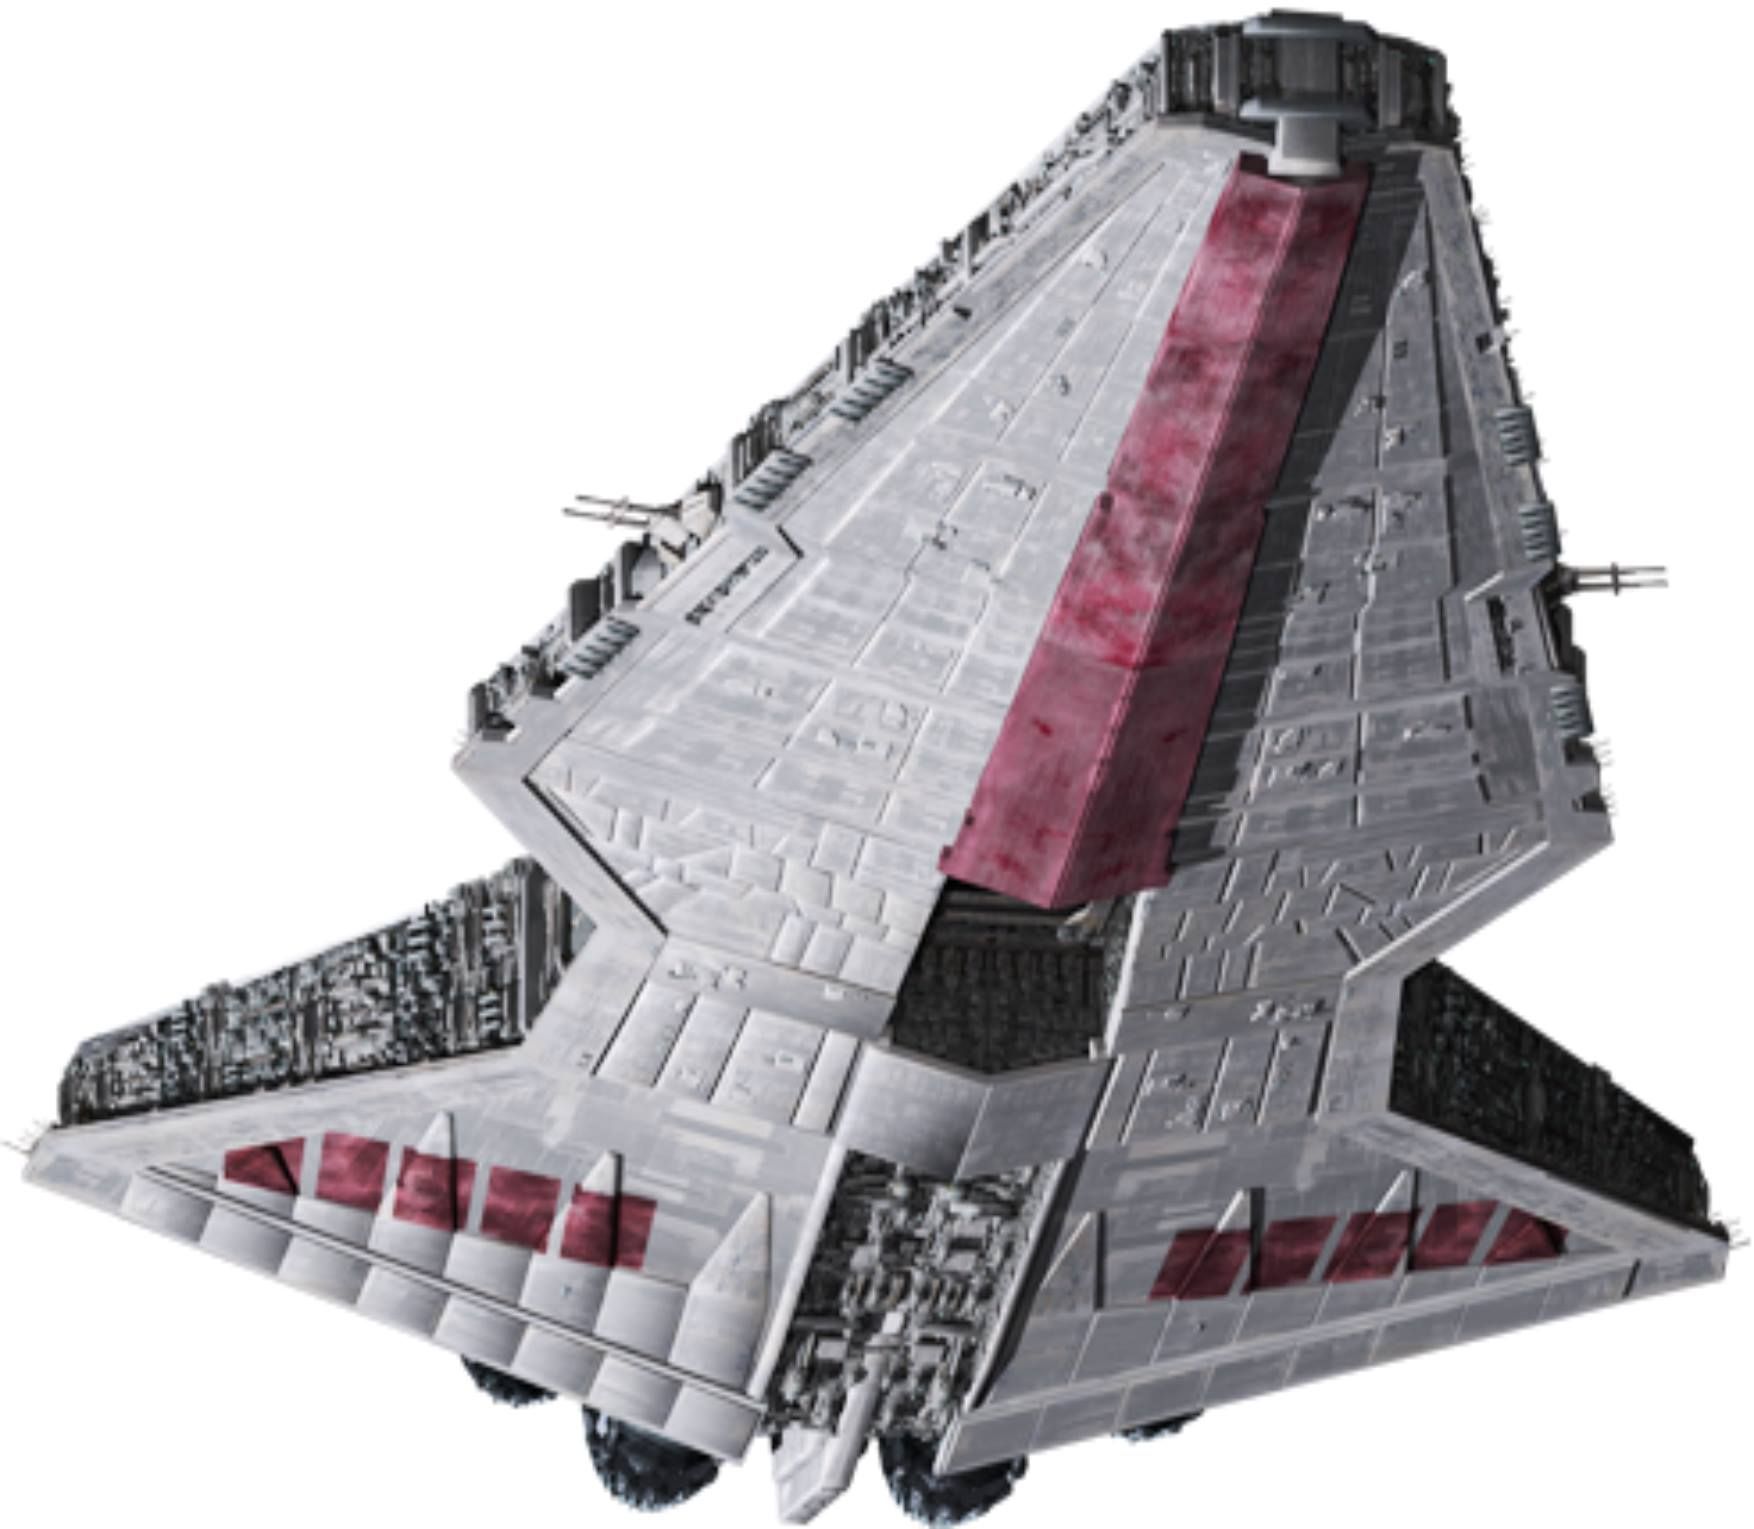 Venator Class Star Destroyer / Flagship Of The Republic Starfleet #MidweekPedia DESCRIPTION: Also Kno. Star Wars Vehicles, Star Wars Ships, Star Wars Ships Design